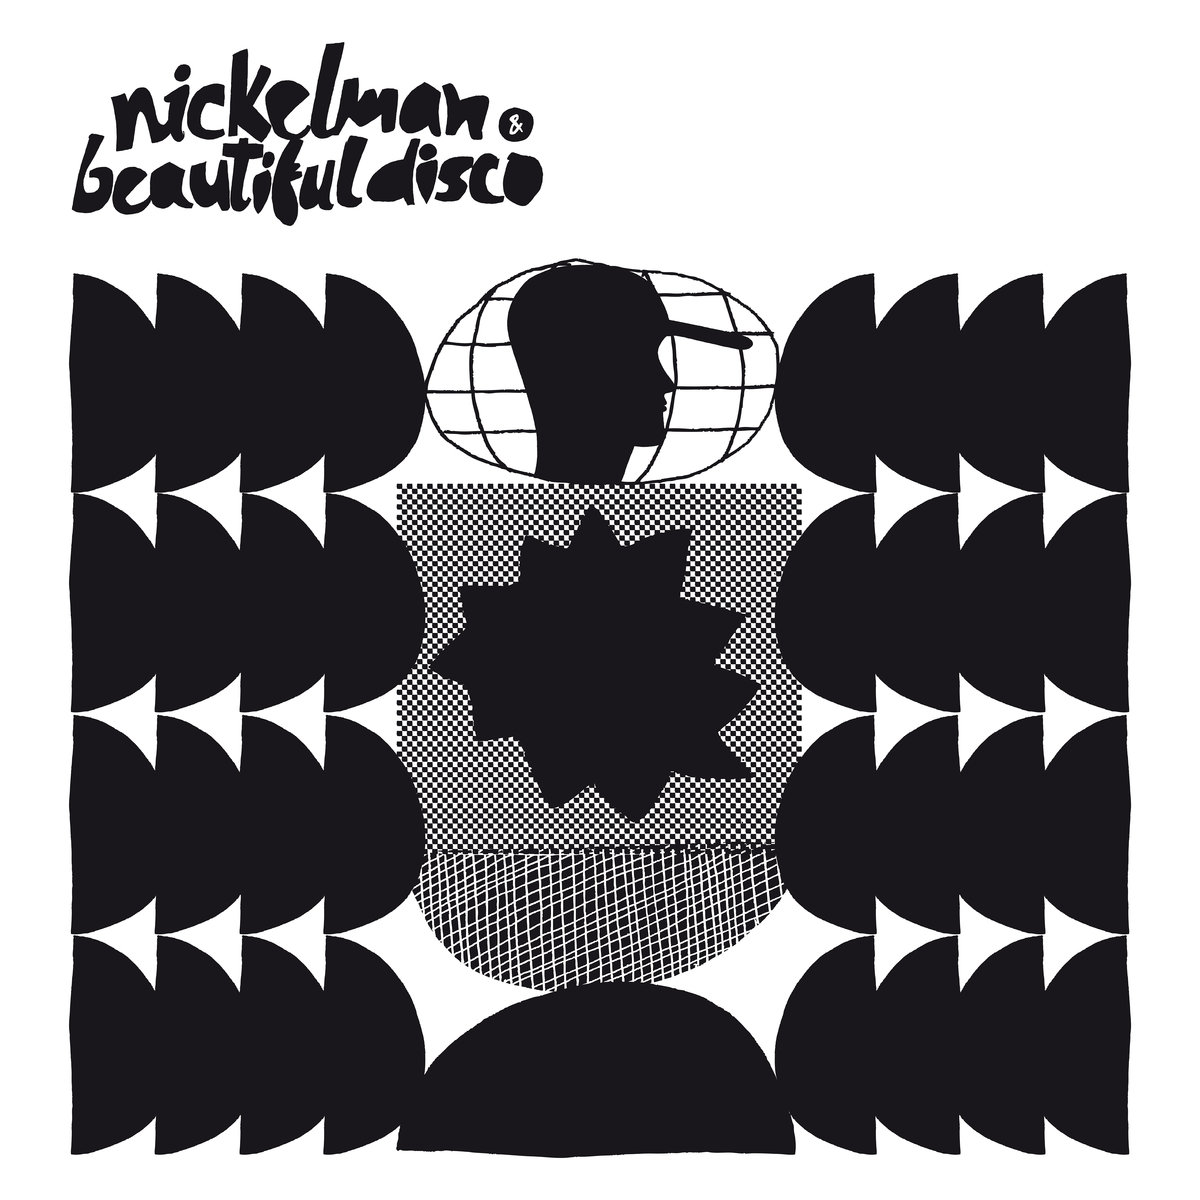 NICKELMAN & Beautiful Disco beat tape